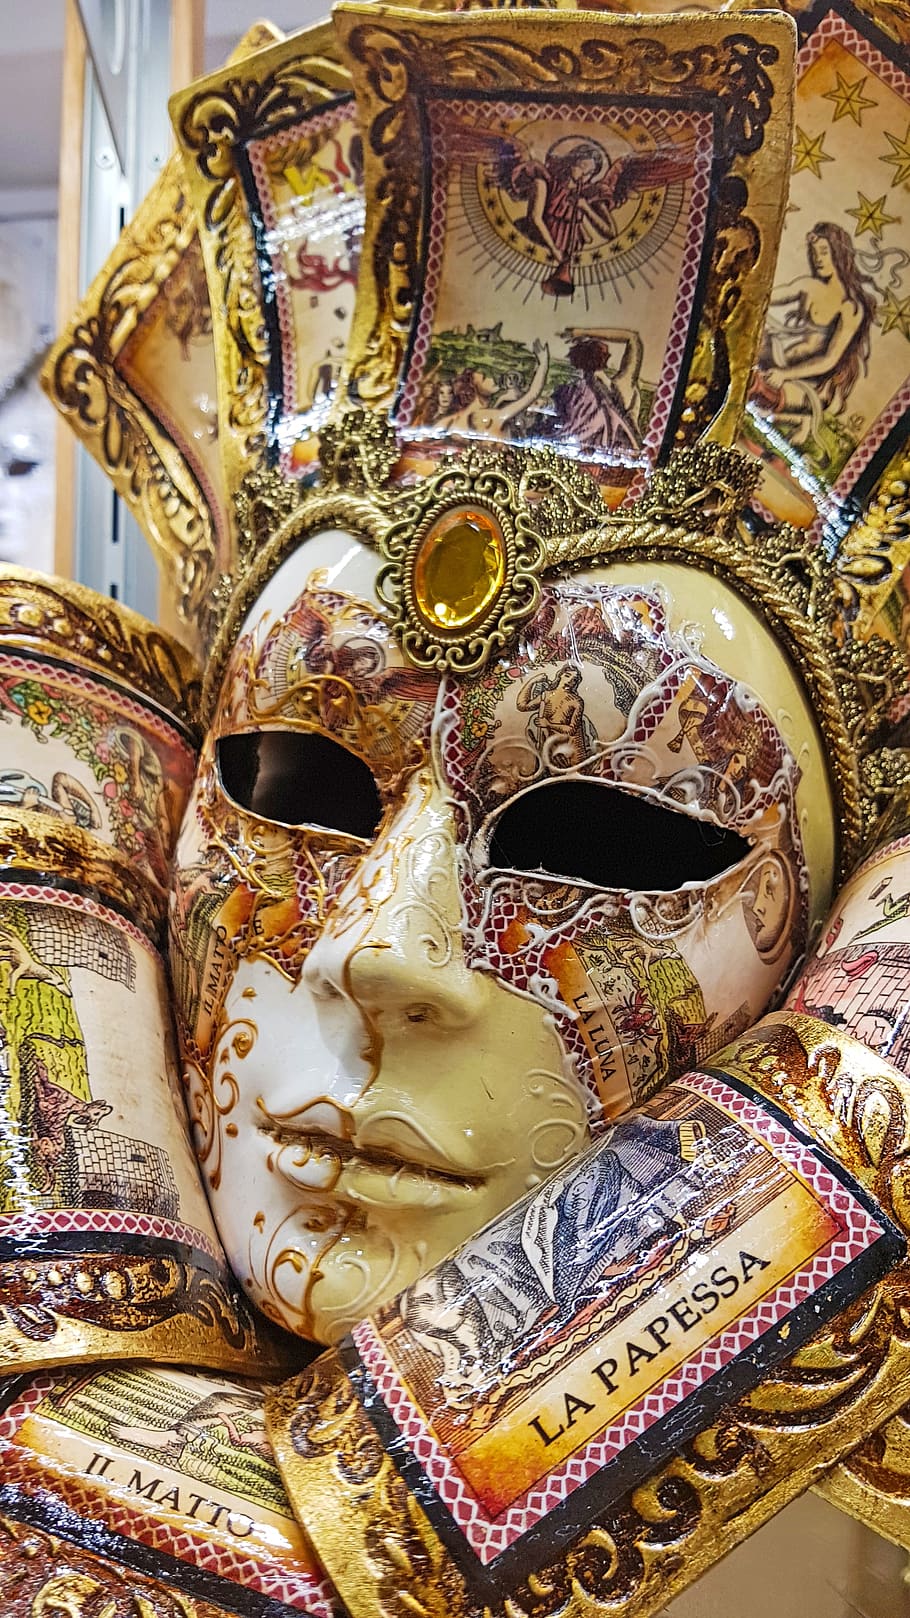 mask, carnival, venice, venetian mask, masquerade, art and craft, human representation, representation, mask - disguise, disguise